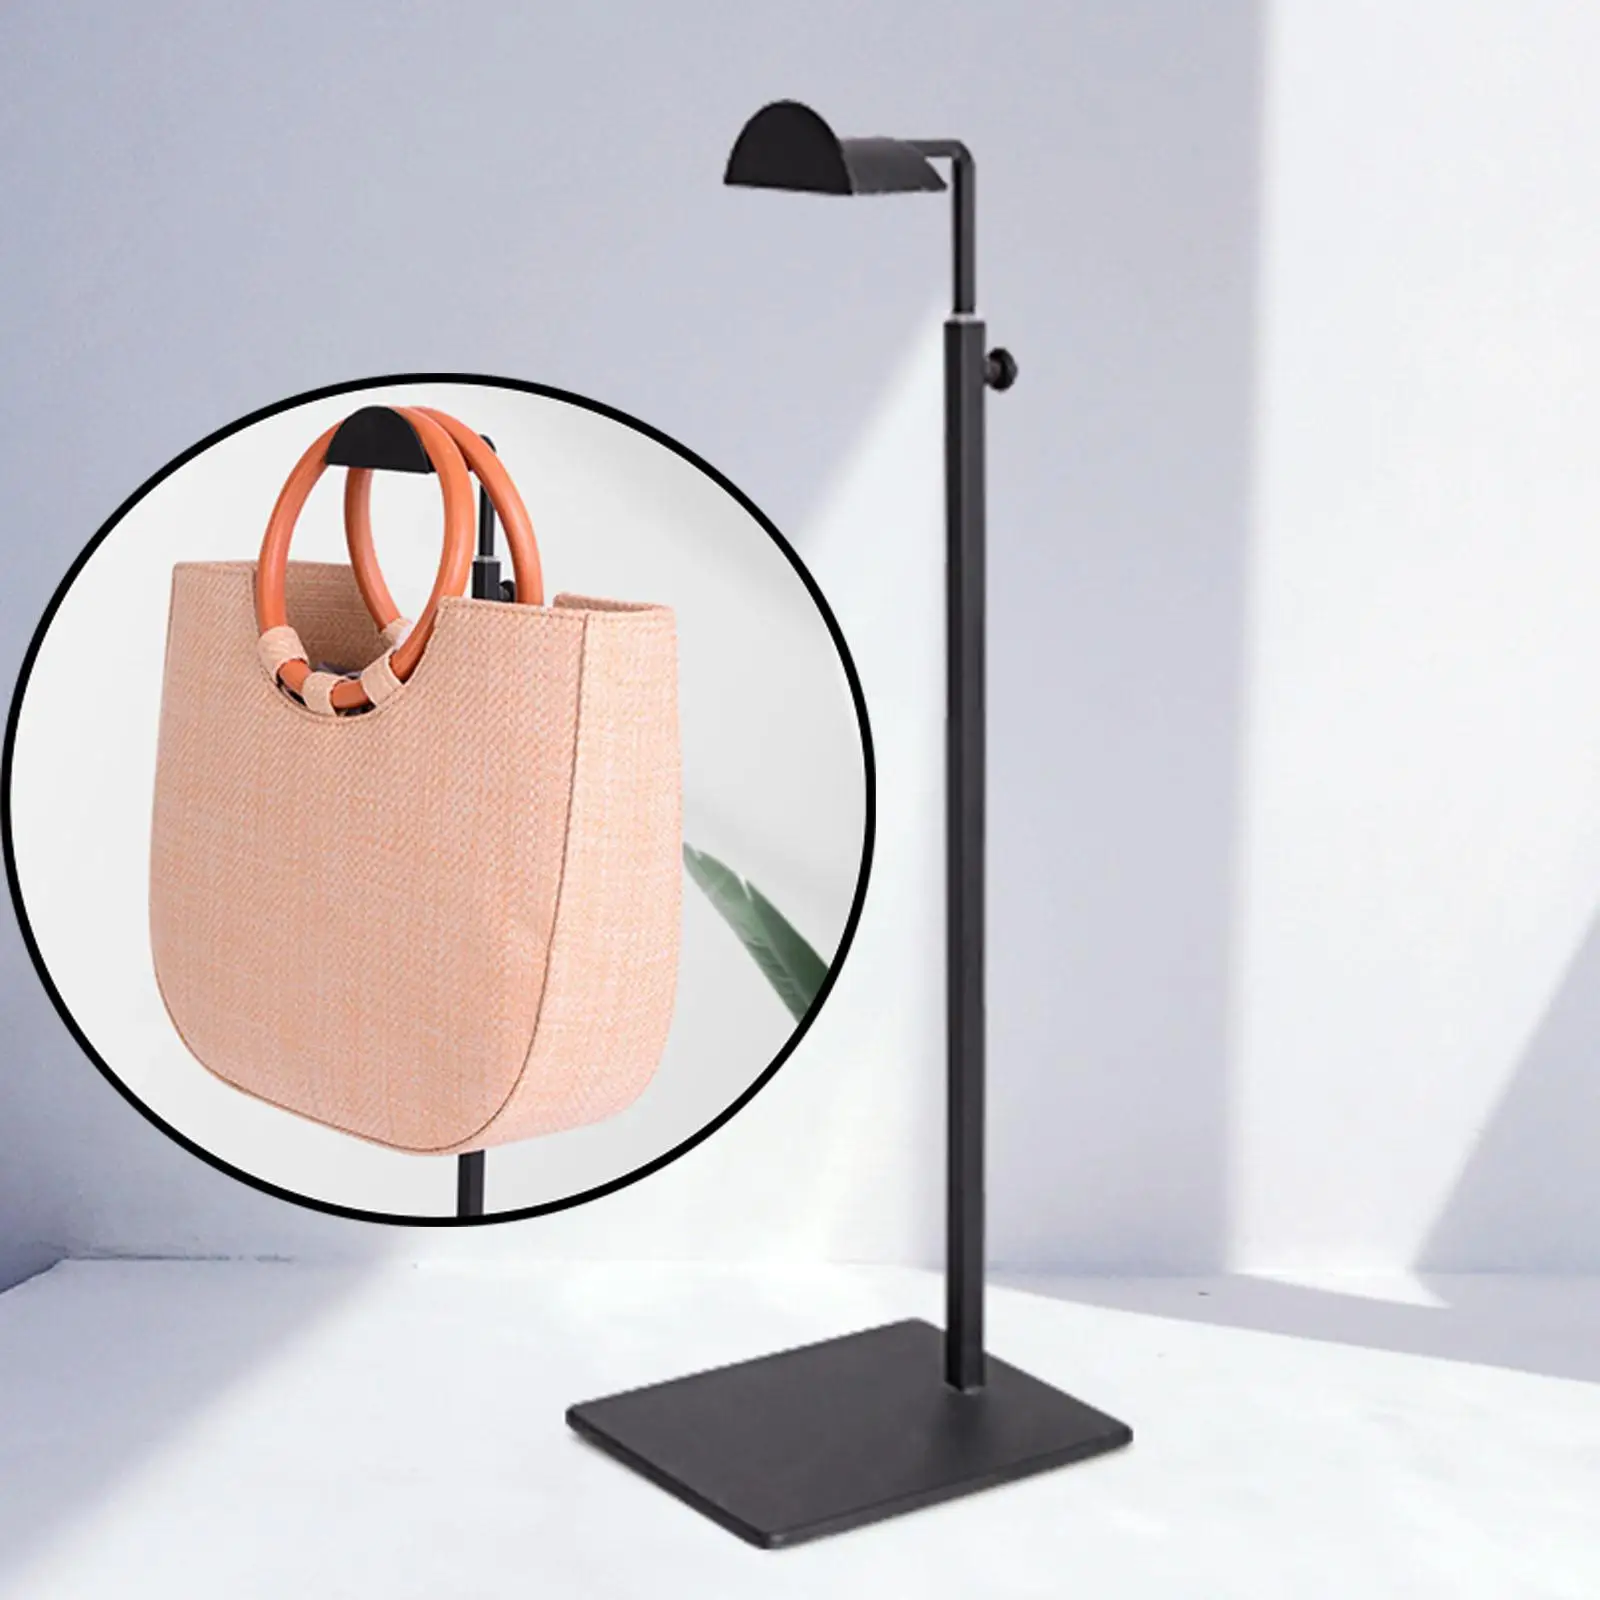 Handbag Display Stand Adjustable Organizer Bag Holder for Closet Countertop